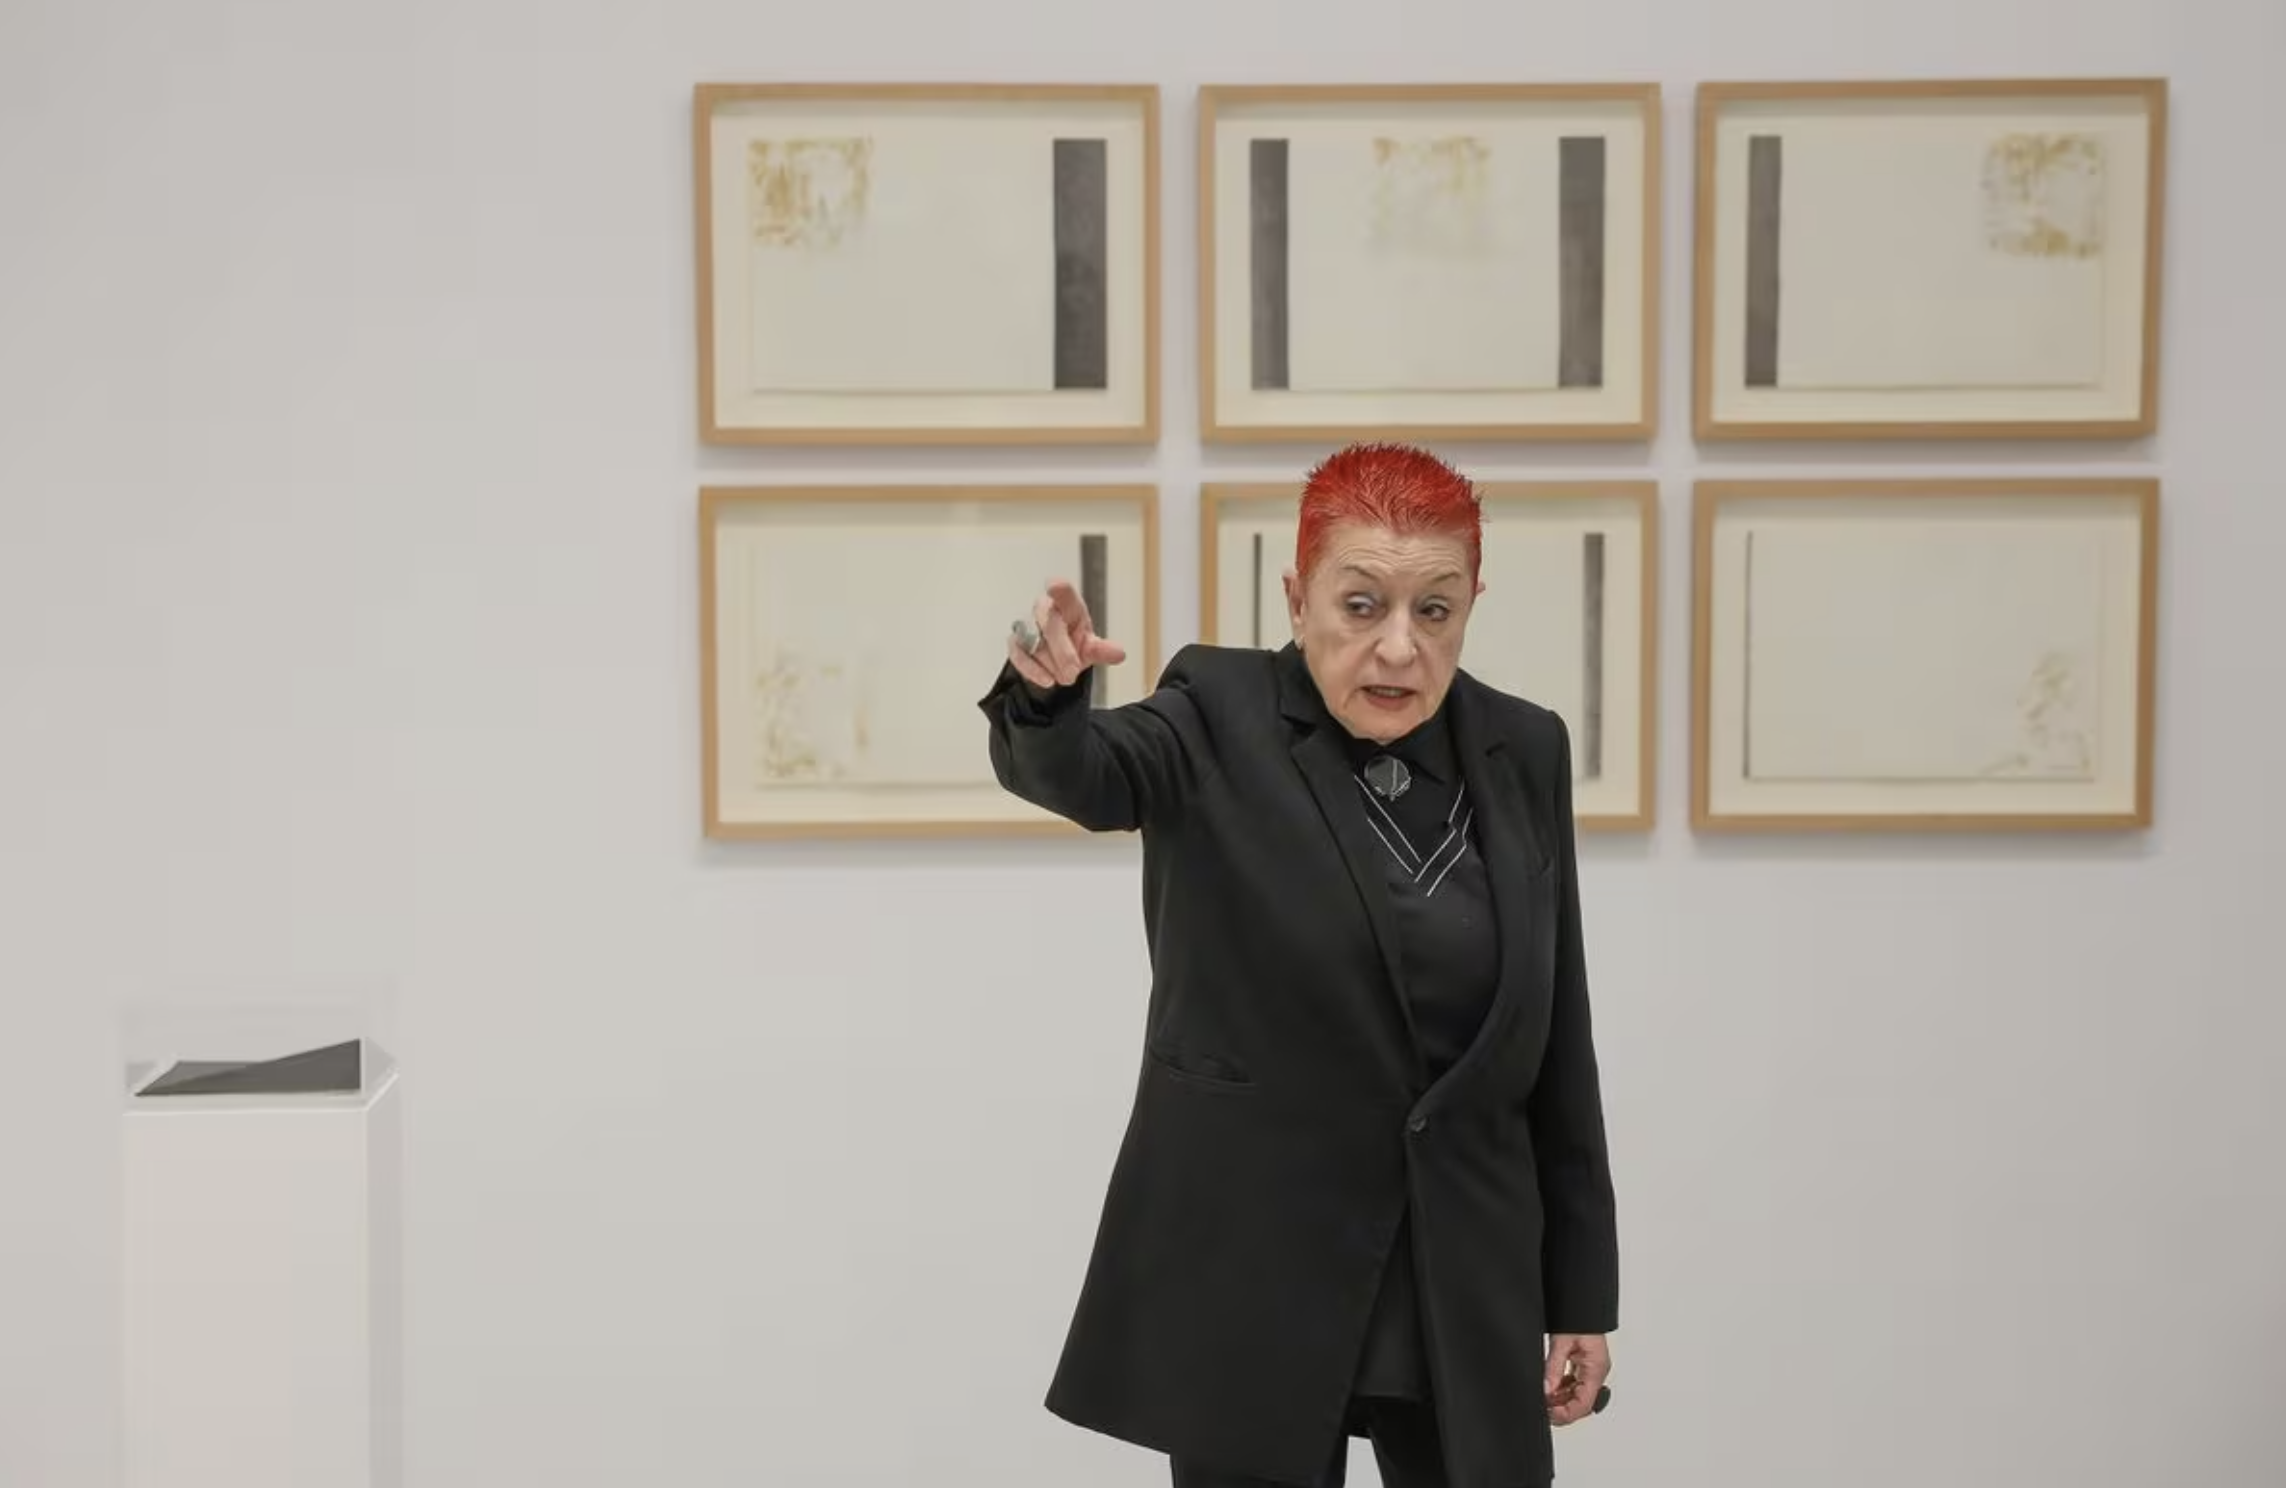 "Half a century of Concha Jerez's career, the critical conscience of art".